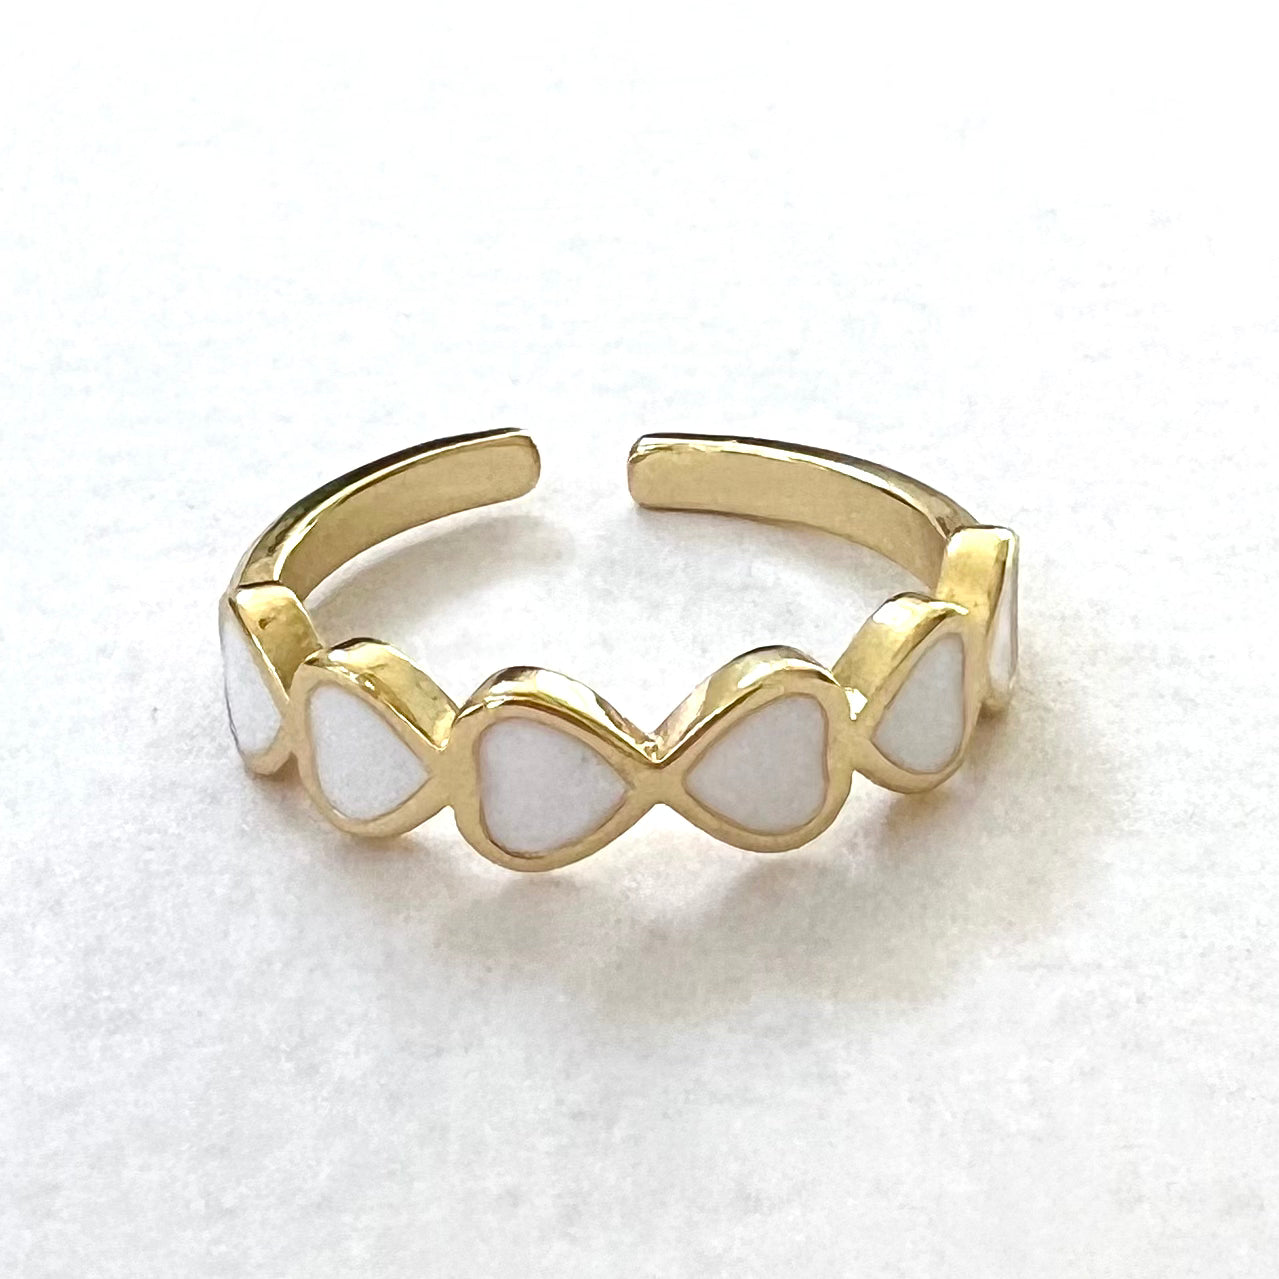 Heart shape band ring